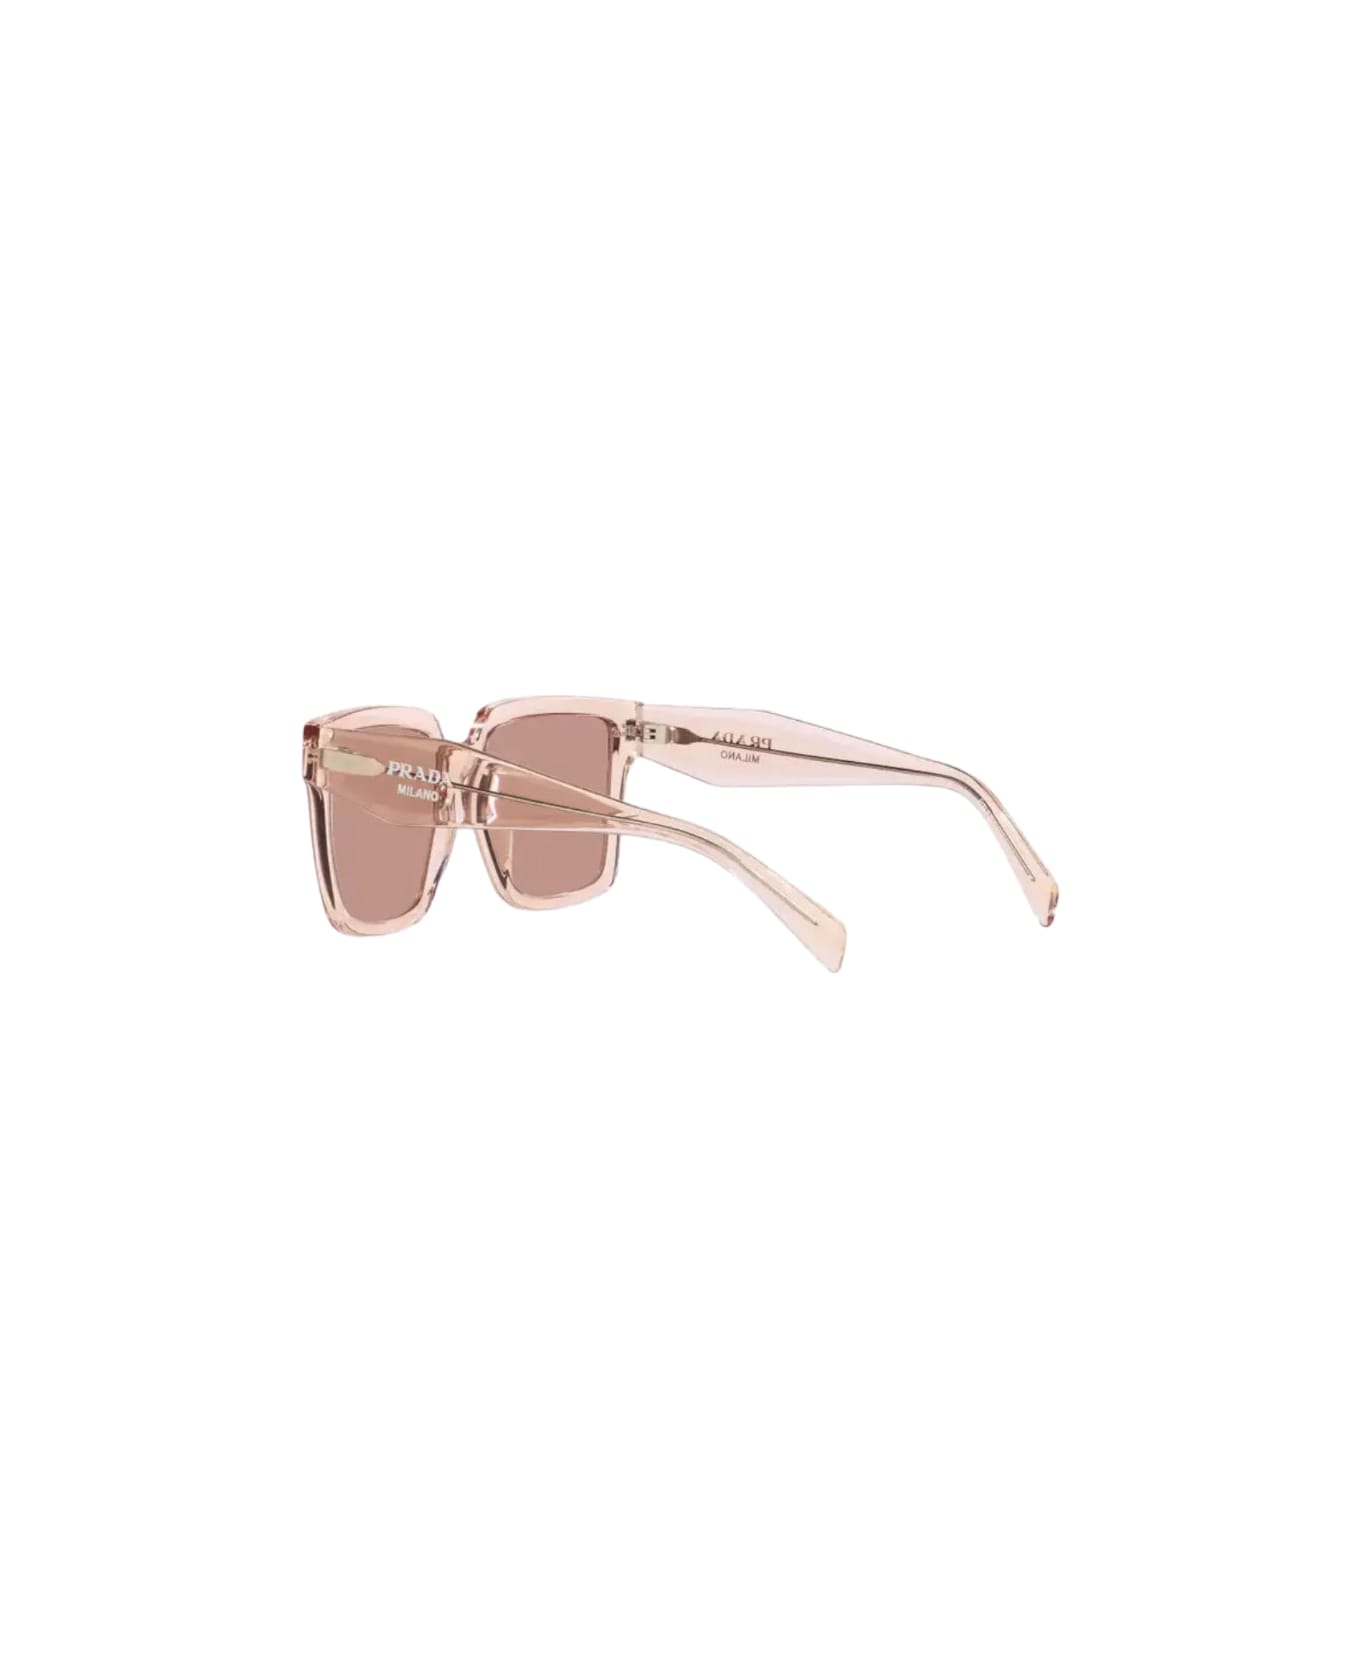 Prada Eyewear Spr 24zs Sunglasses サングラス